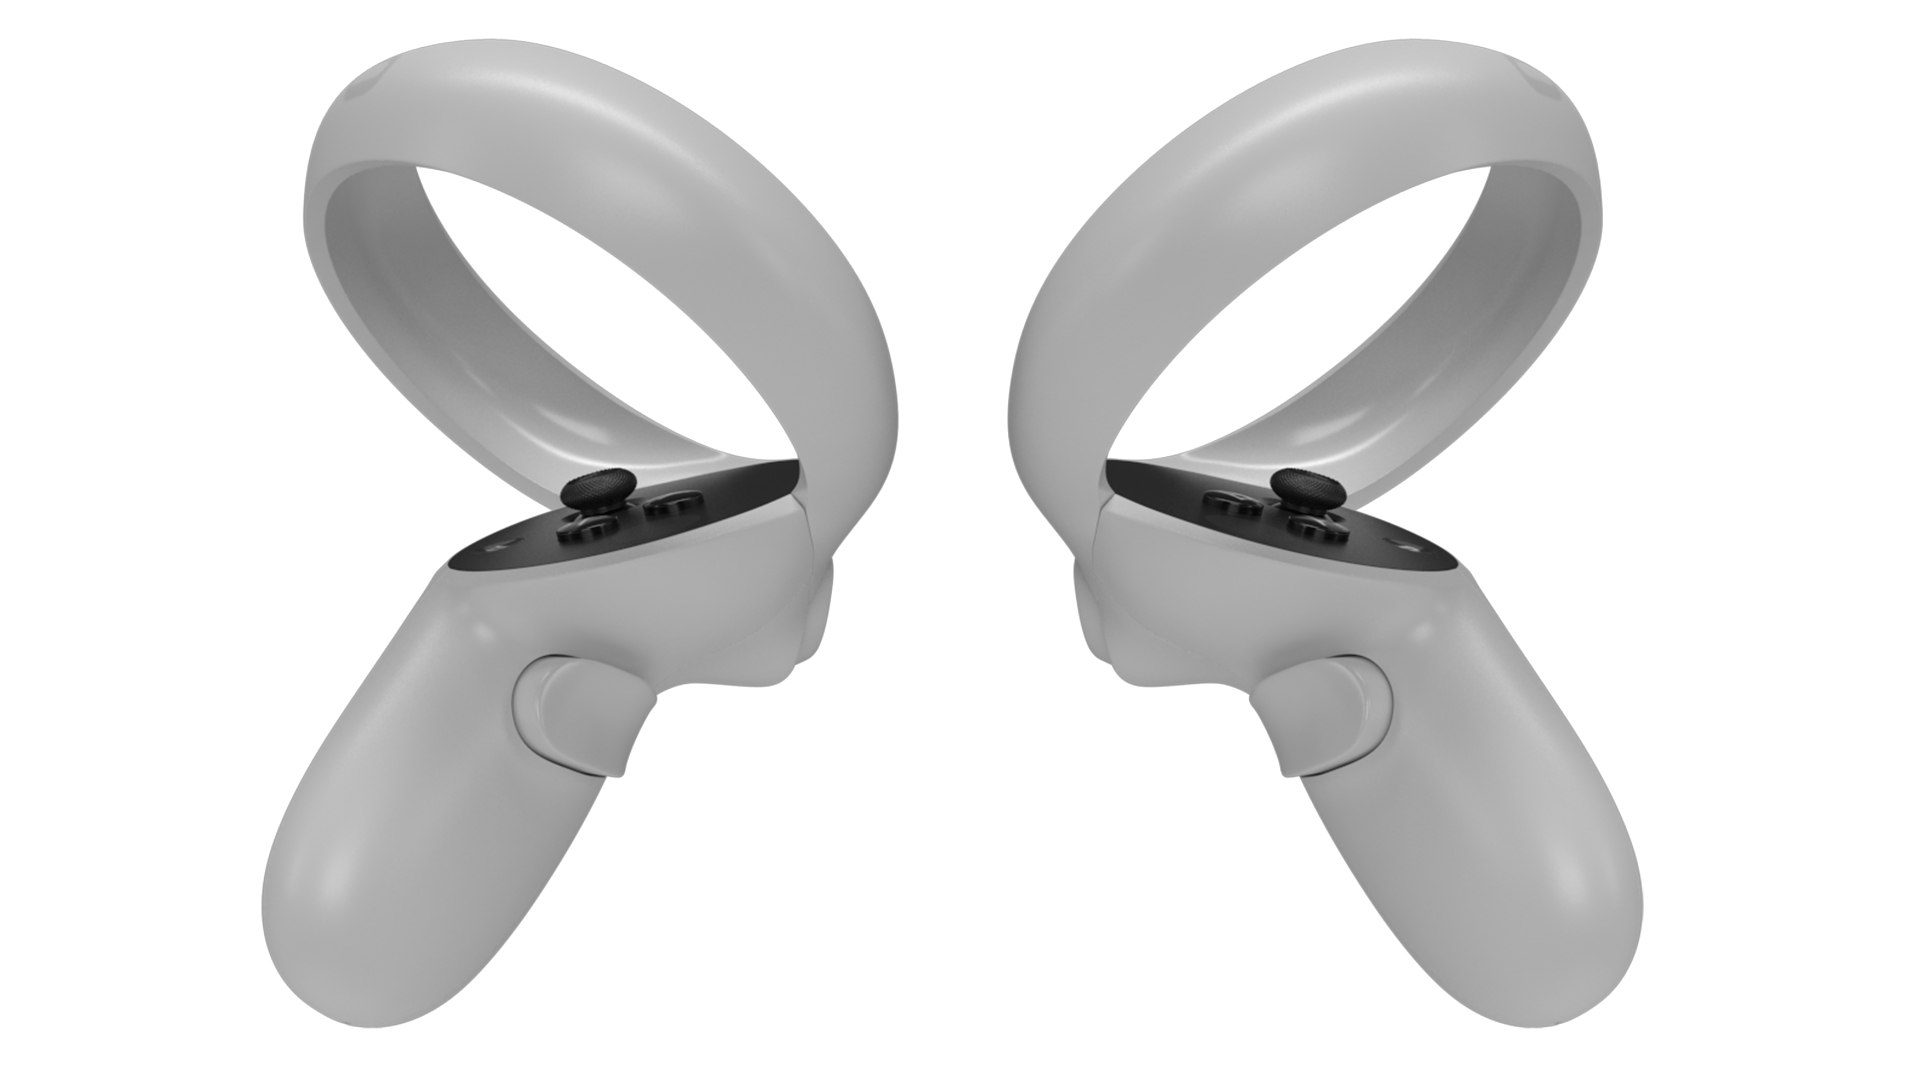 Oculus Quest 2 Controller 3D-Modell - TurboSquid 1664829